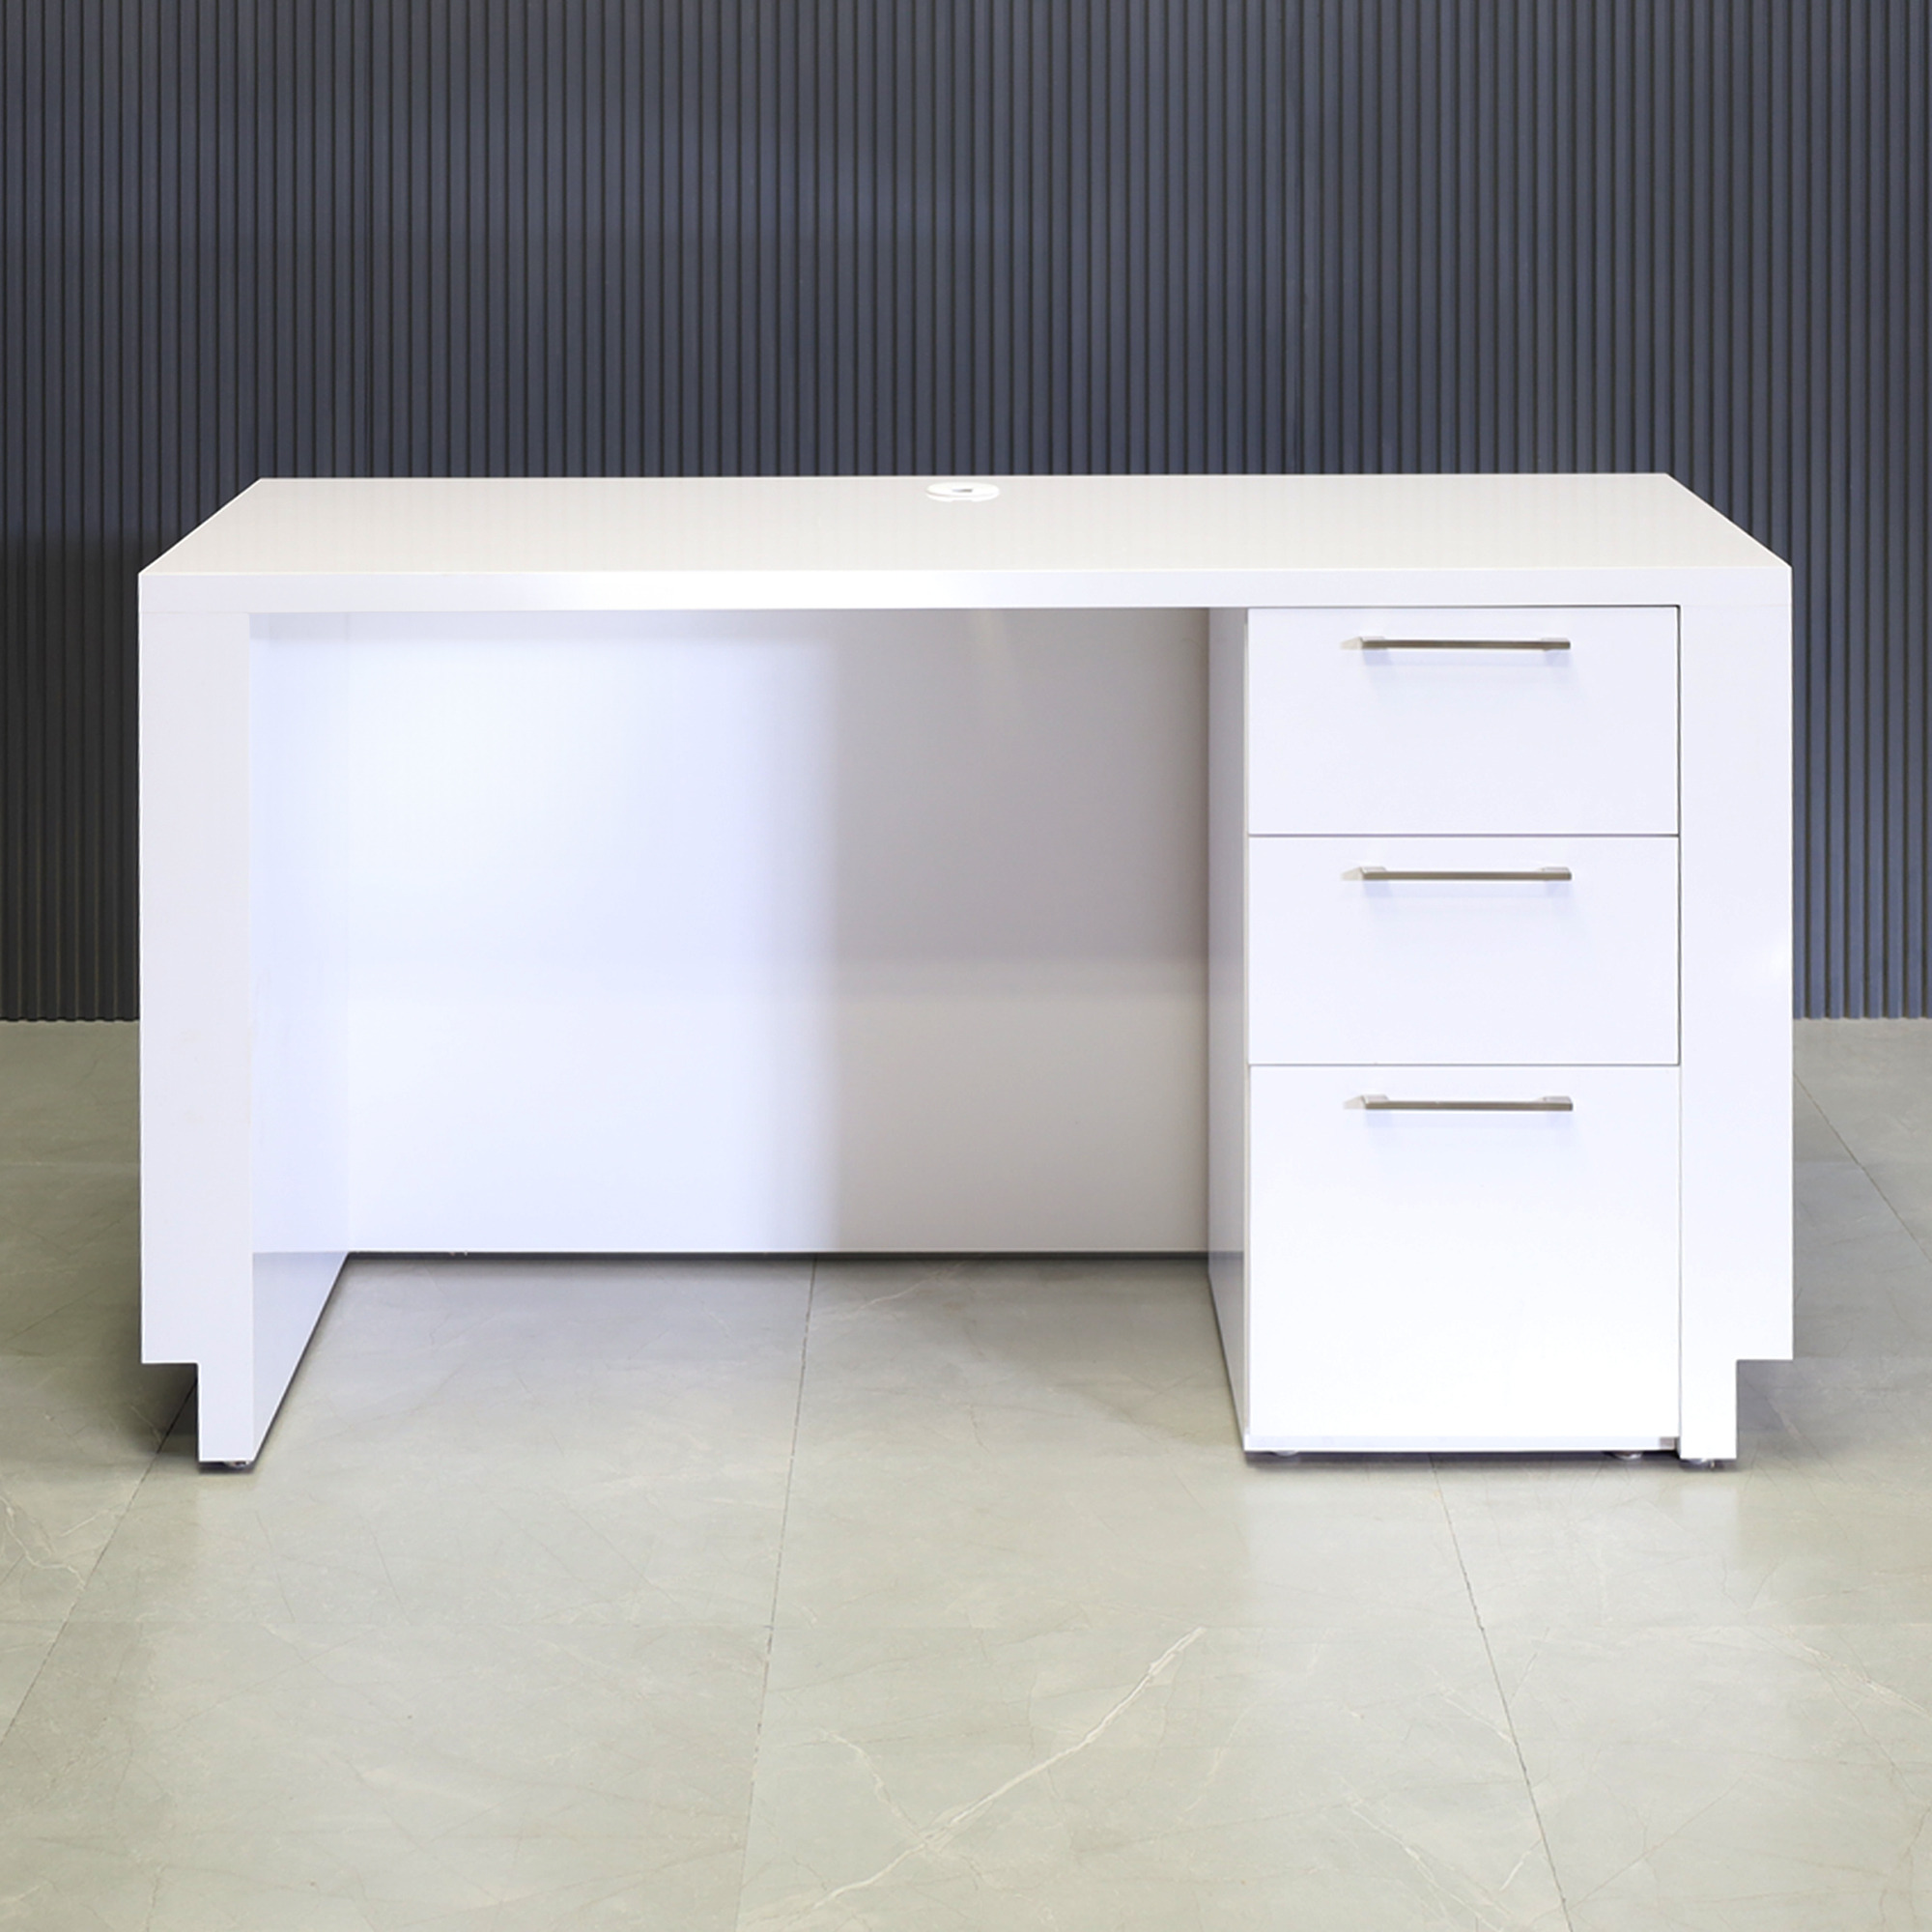 60-inch Houston Custom Reception Desk in white gloss laminate main desk and brushed aluminum toe-kick, shown here.